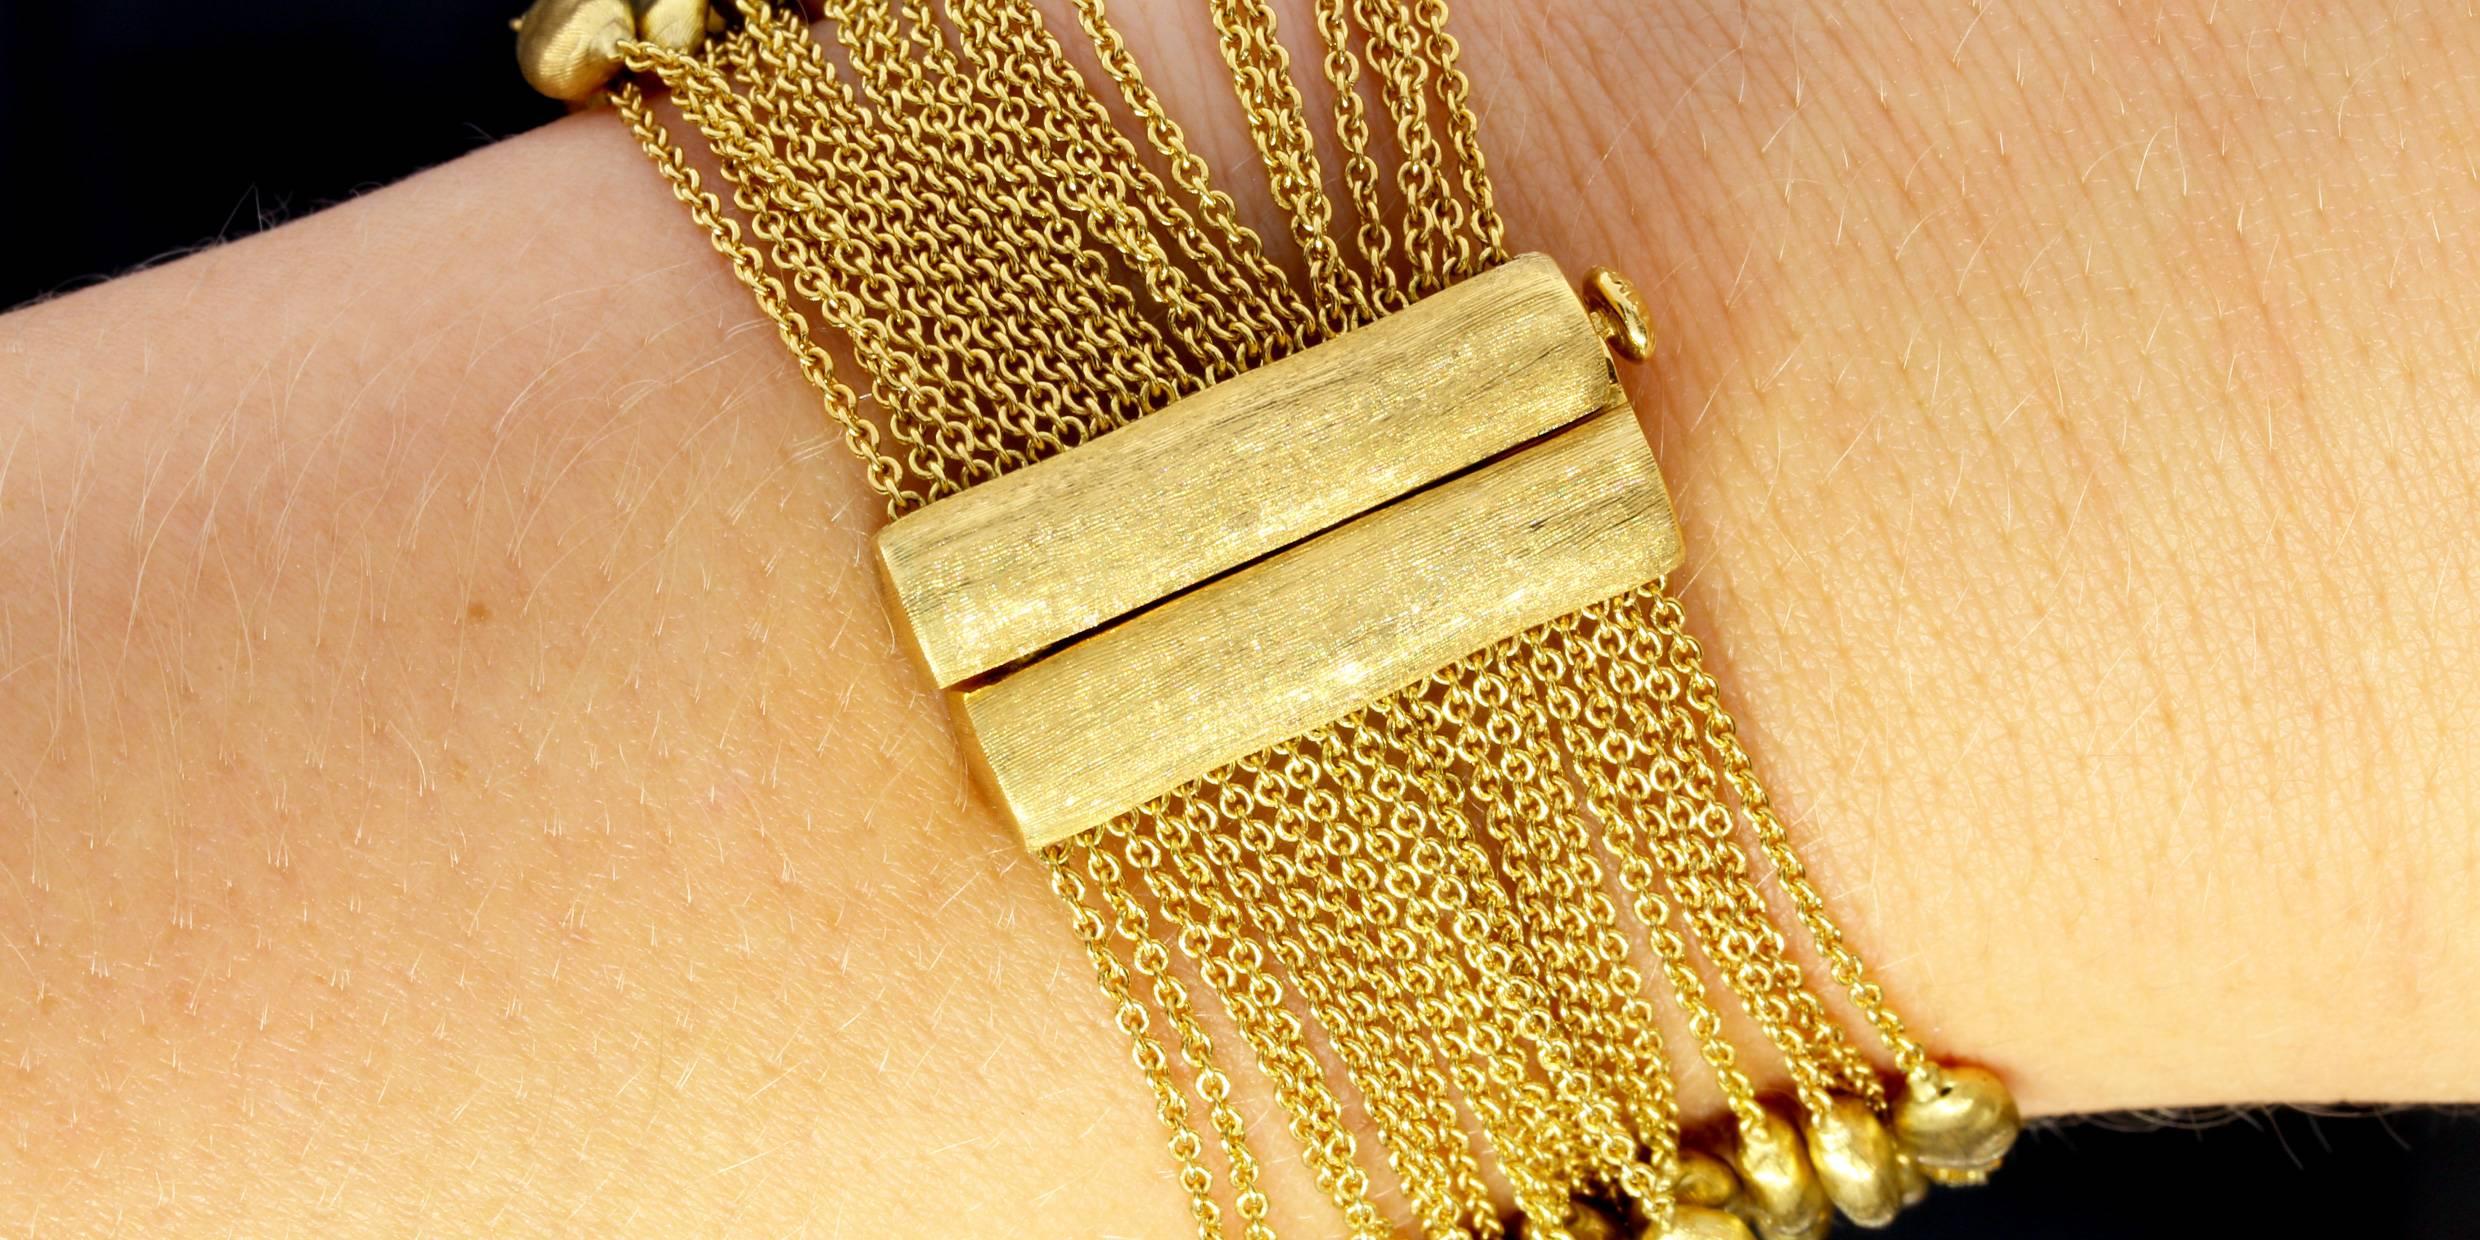 marco bicego siviglia bracelet